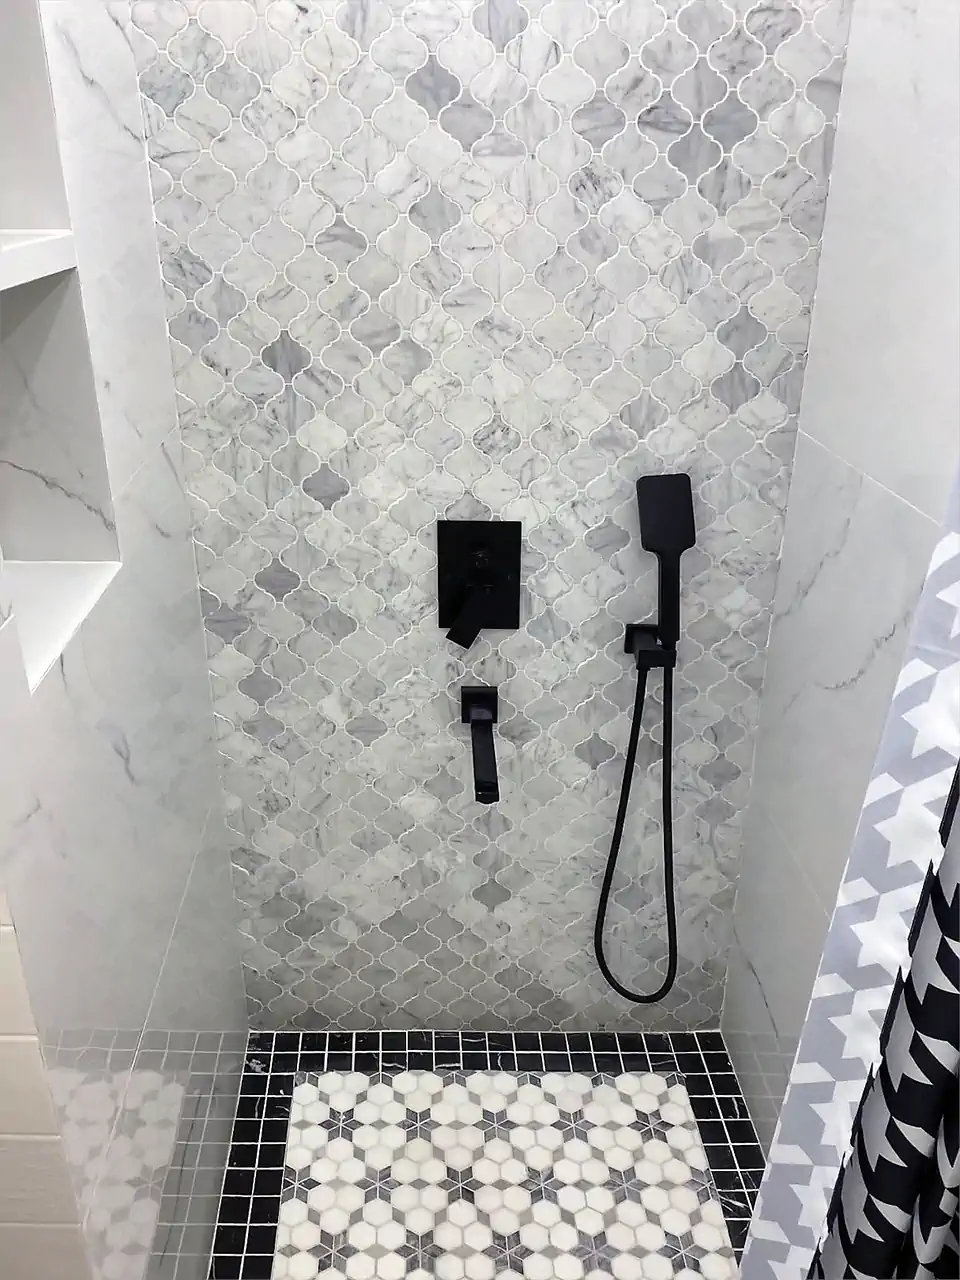 Arabesque Marble Tiles as the Shower Wall Tiles Design Ideas 02